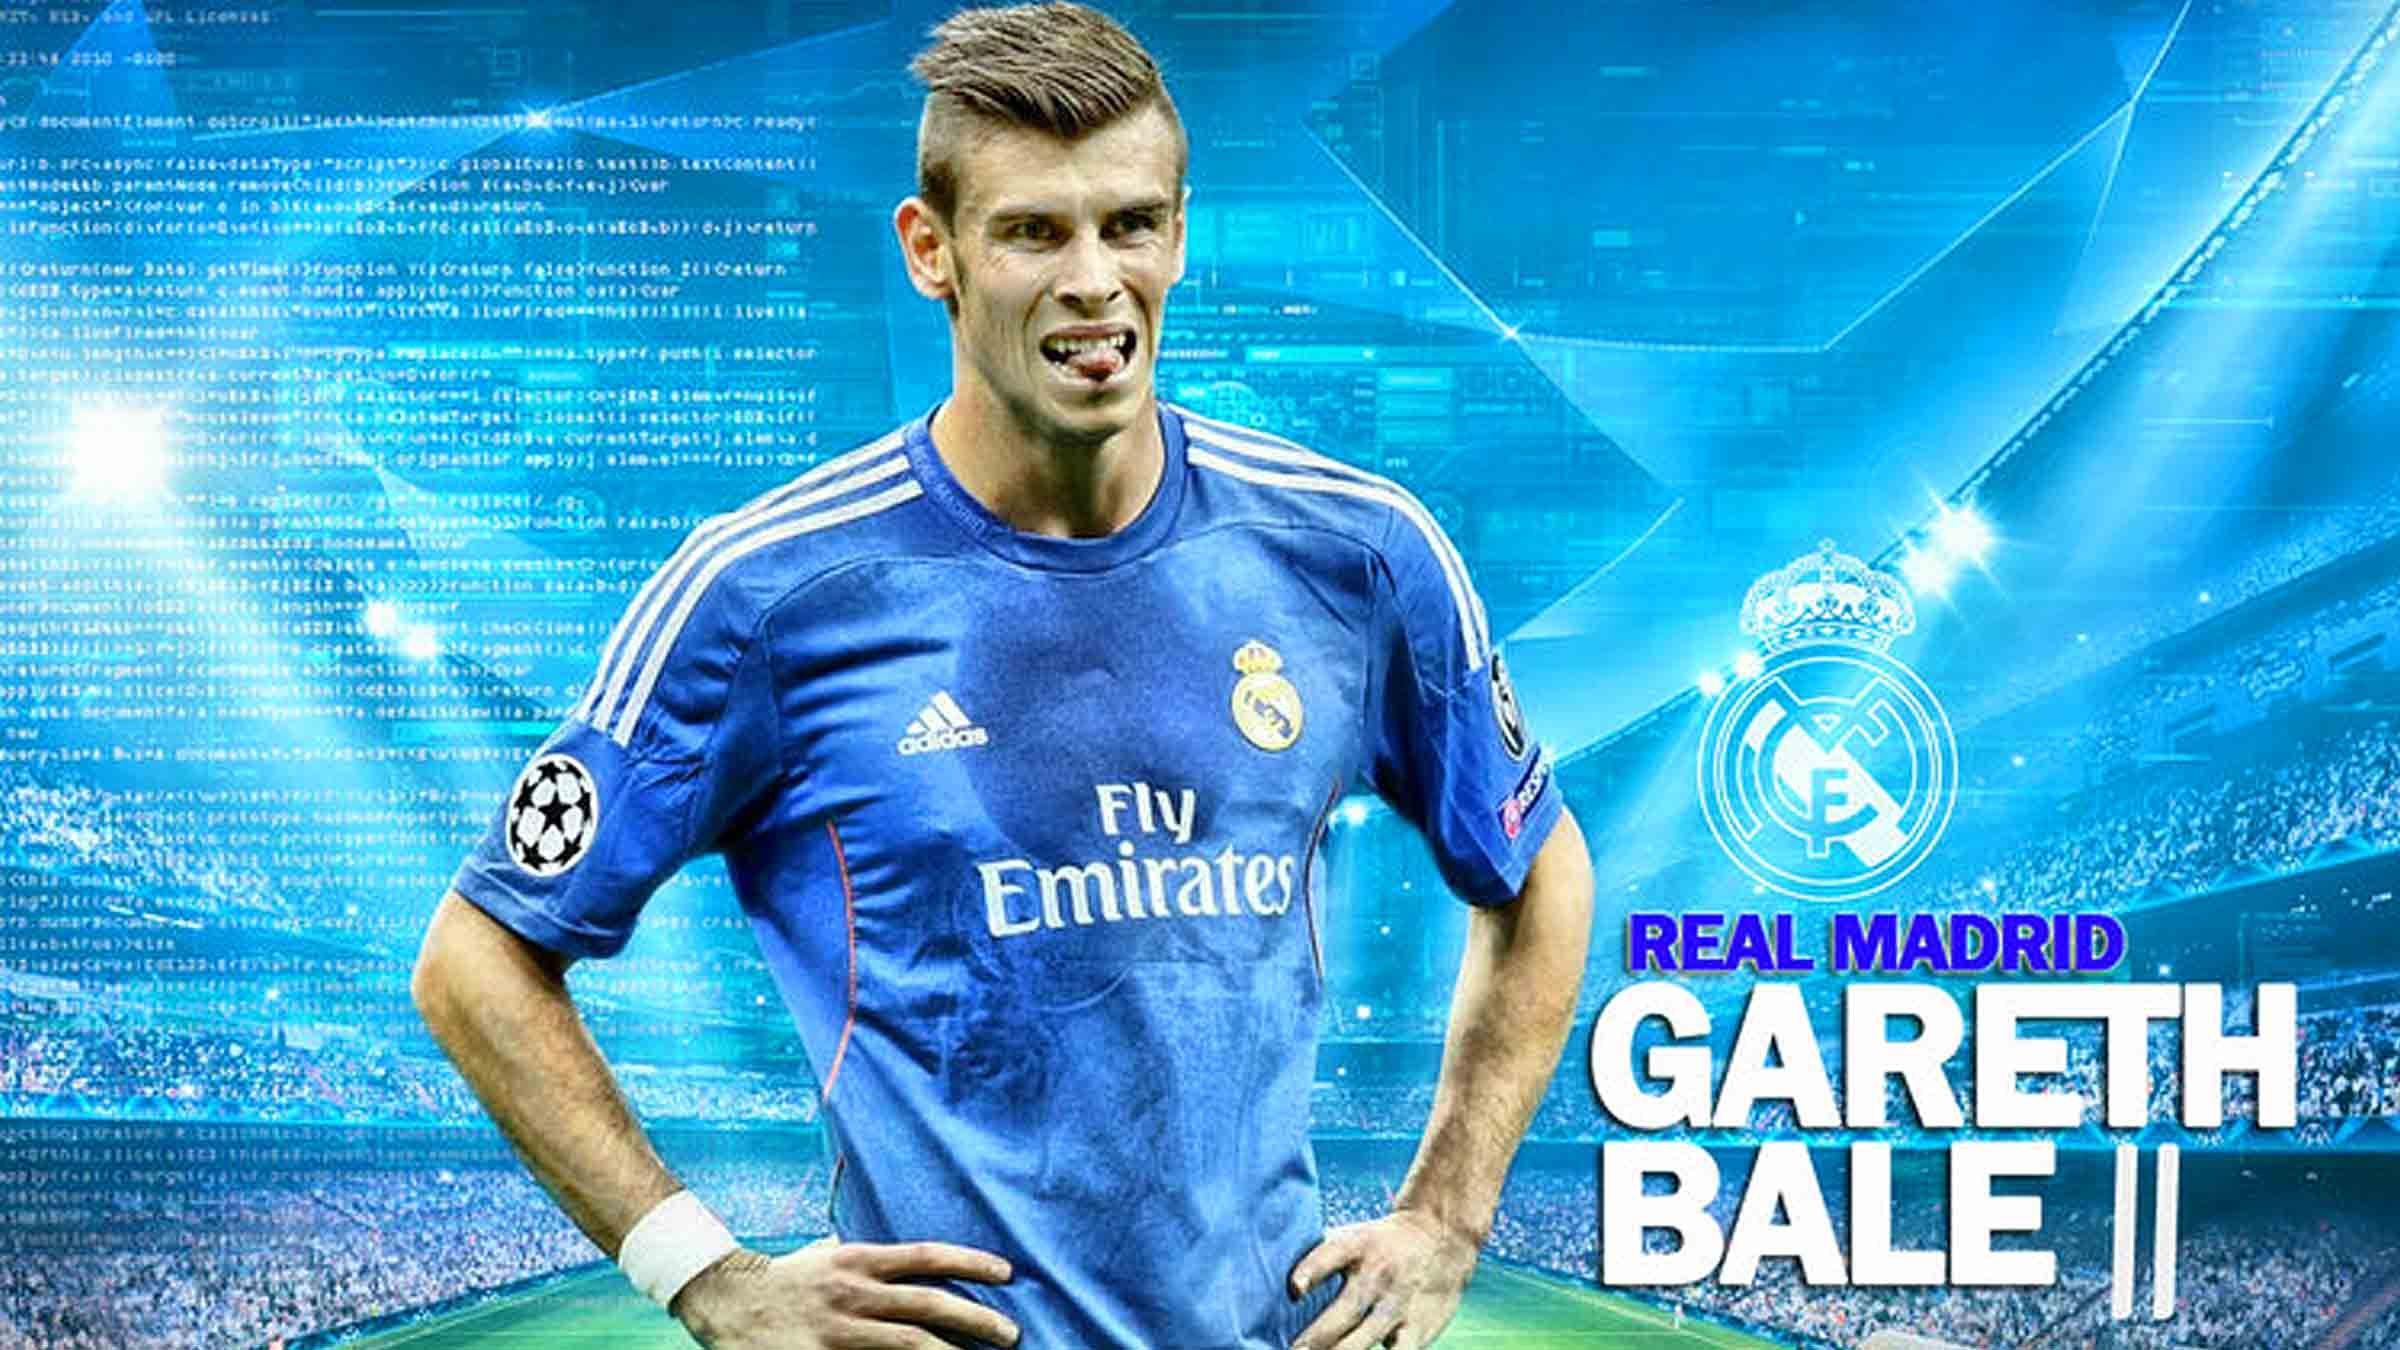 Gareth Bale HD Image 10. Football Wallpaper. Gareth